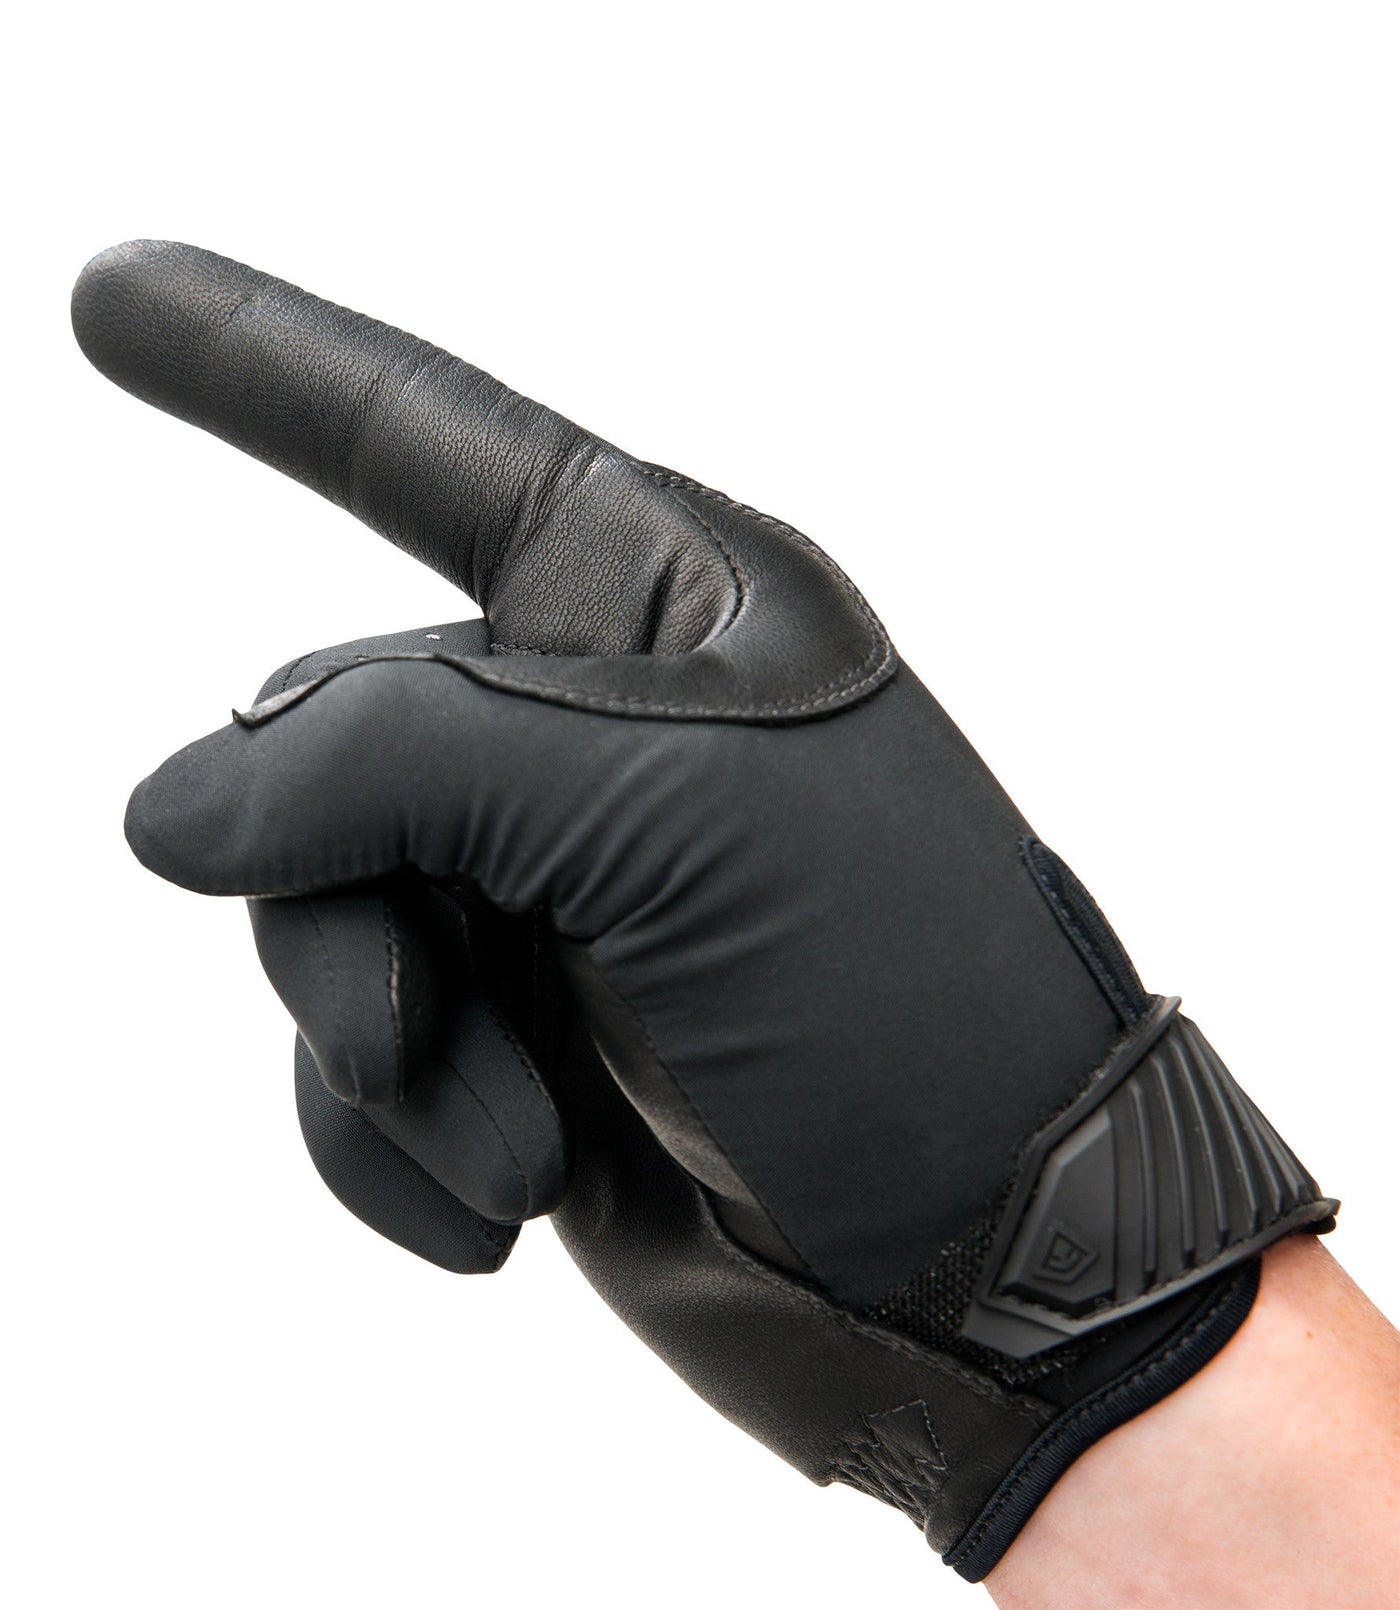 Seamless Finger of Men’s Lightweight Patrol Glove in Black